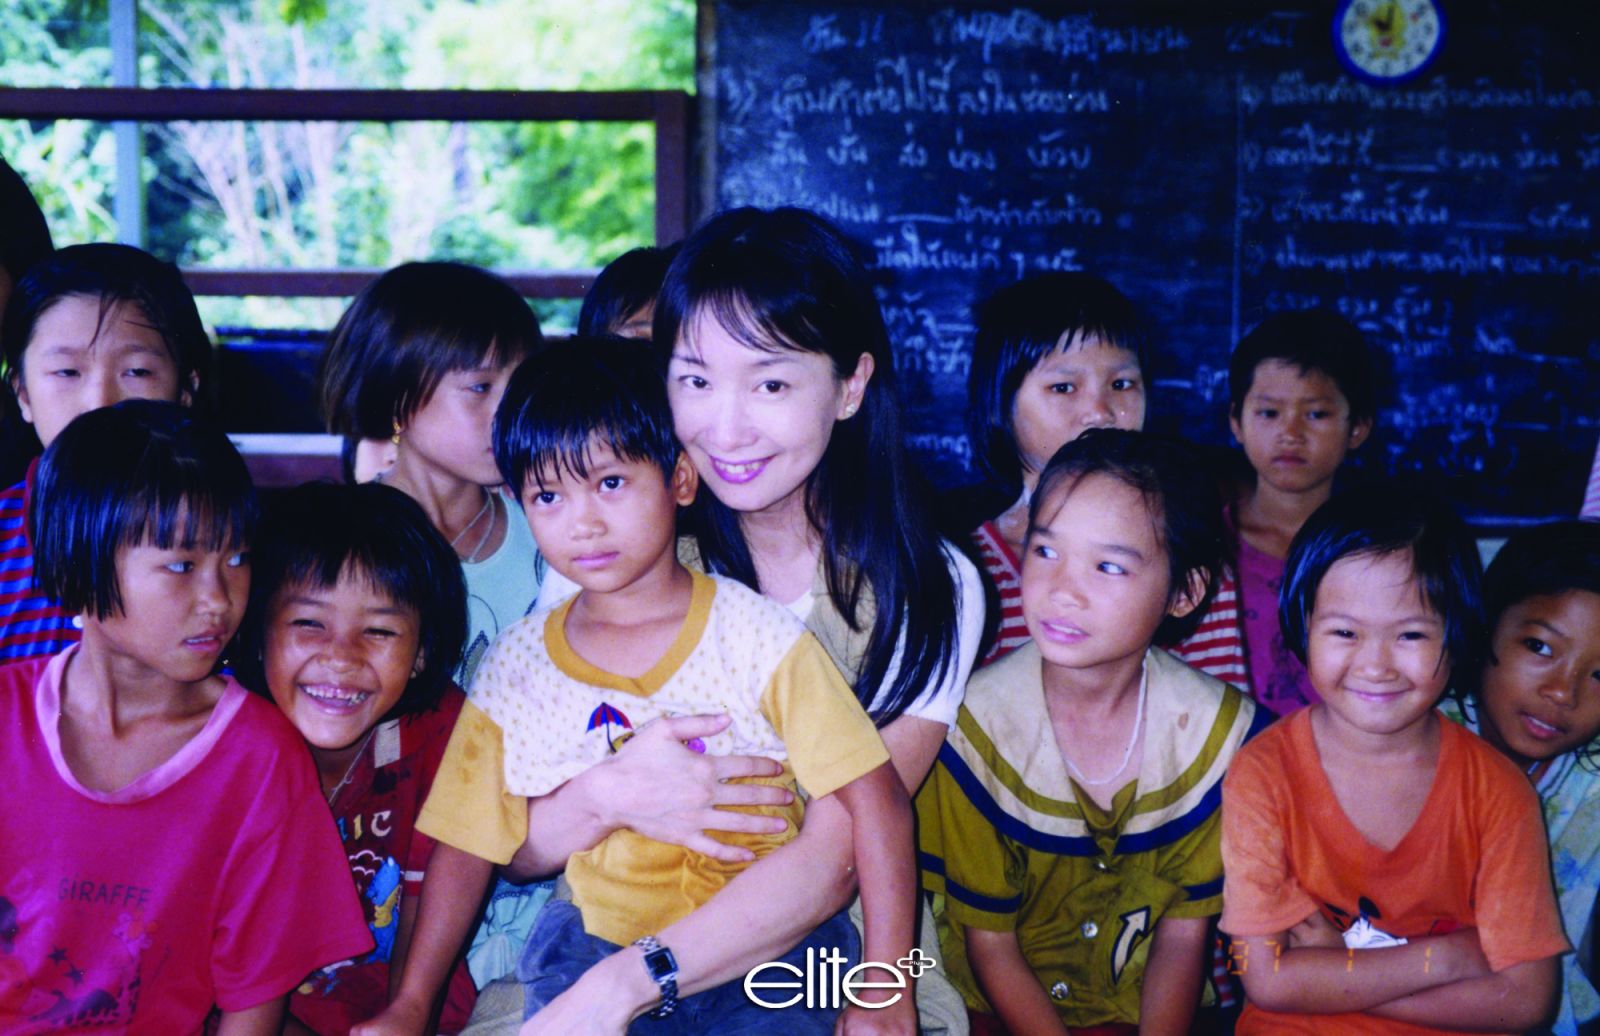 UNICEF goodwill ambassador and ‘PhD pop star’ Agnes Chen